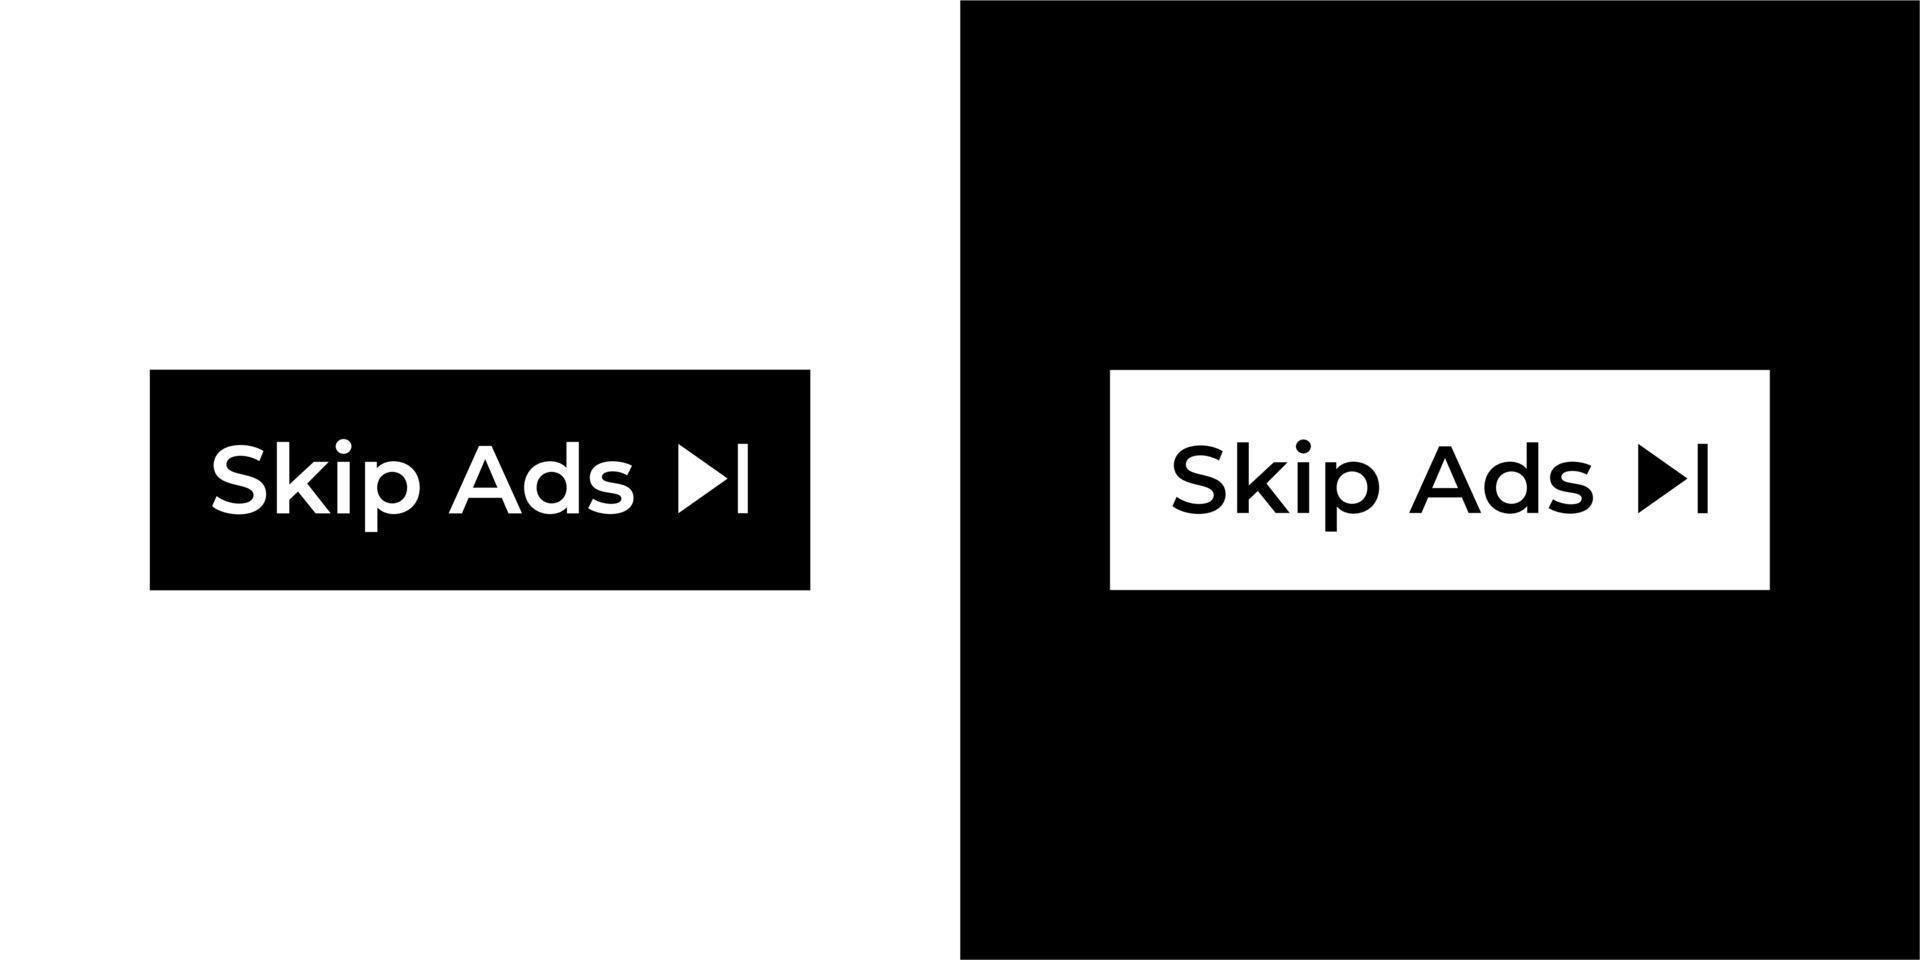 saltar anuncios botón icono vector en estilo clipart. elementos publicitarios